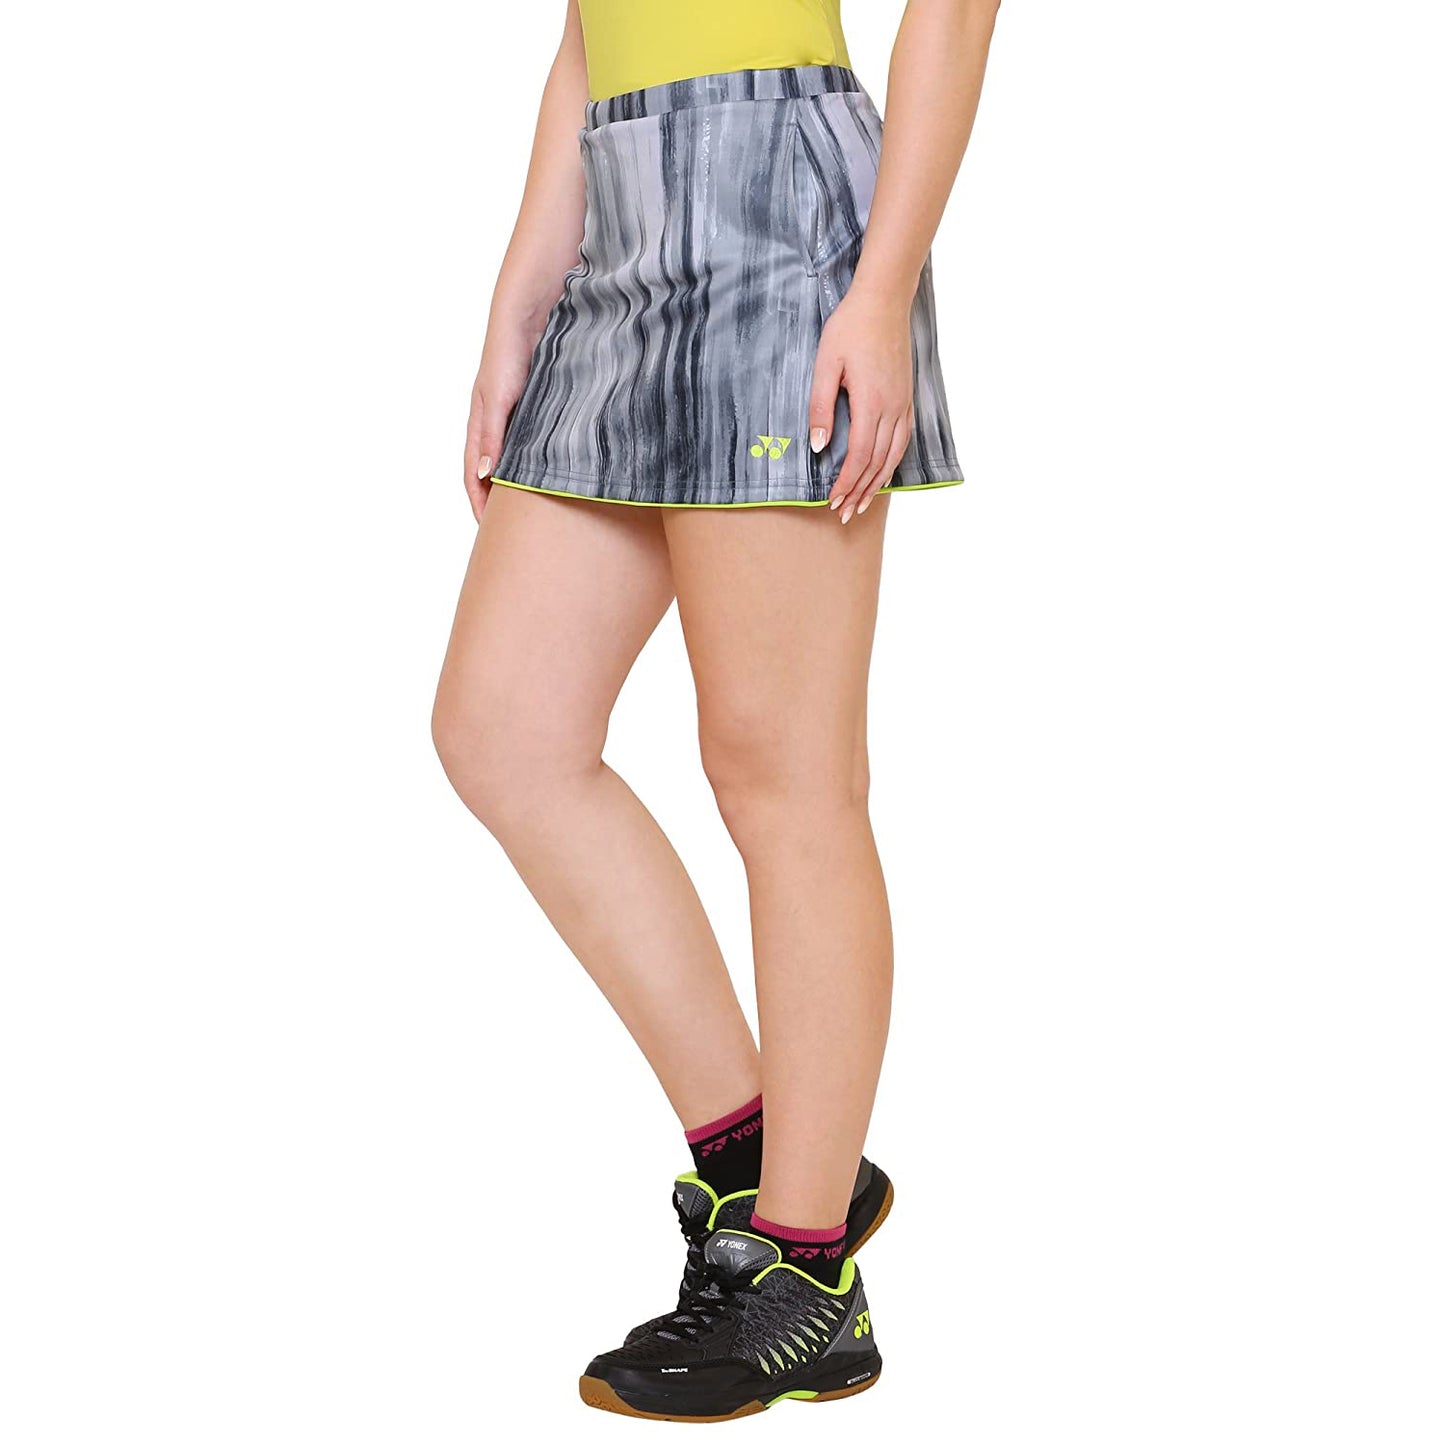 Yonex 905 Skirt for Women, Black - Best Price online Prokicksports.com